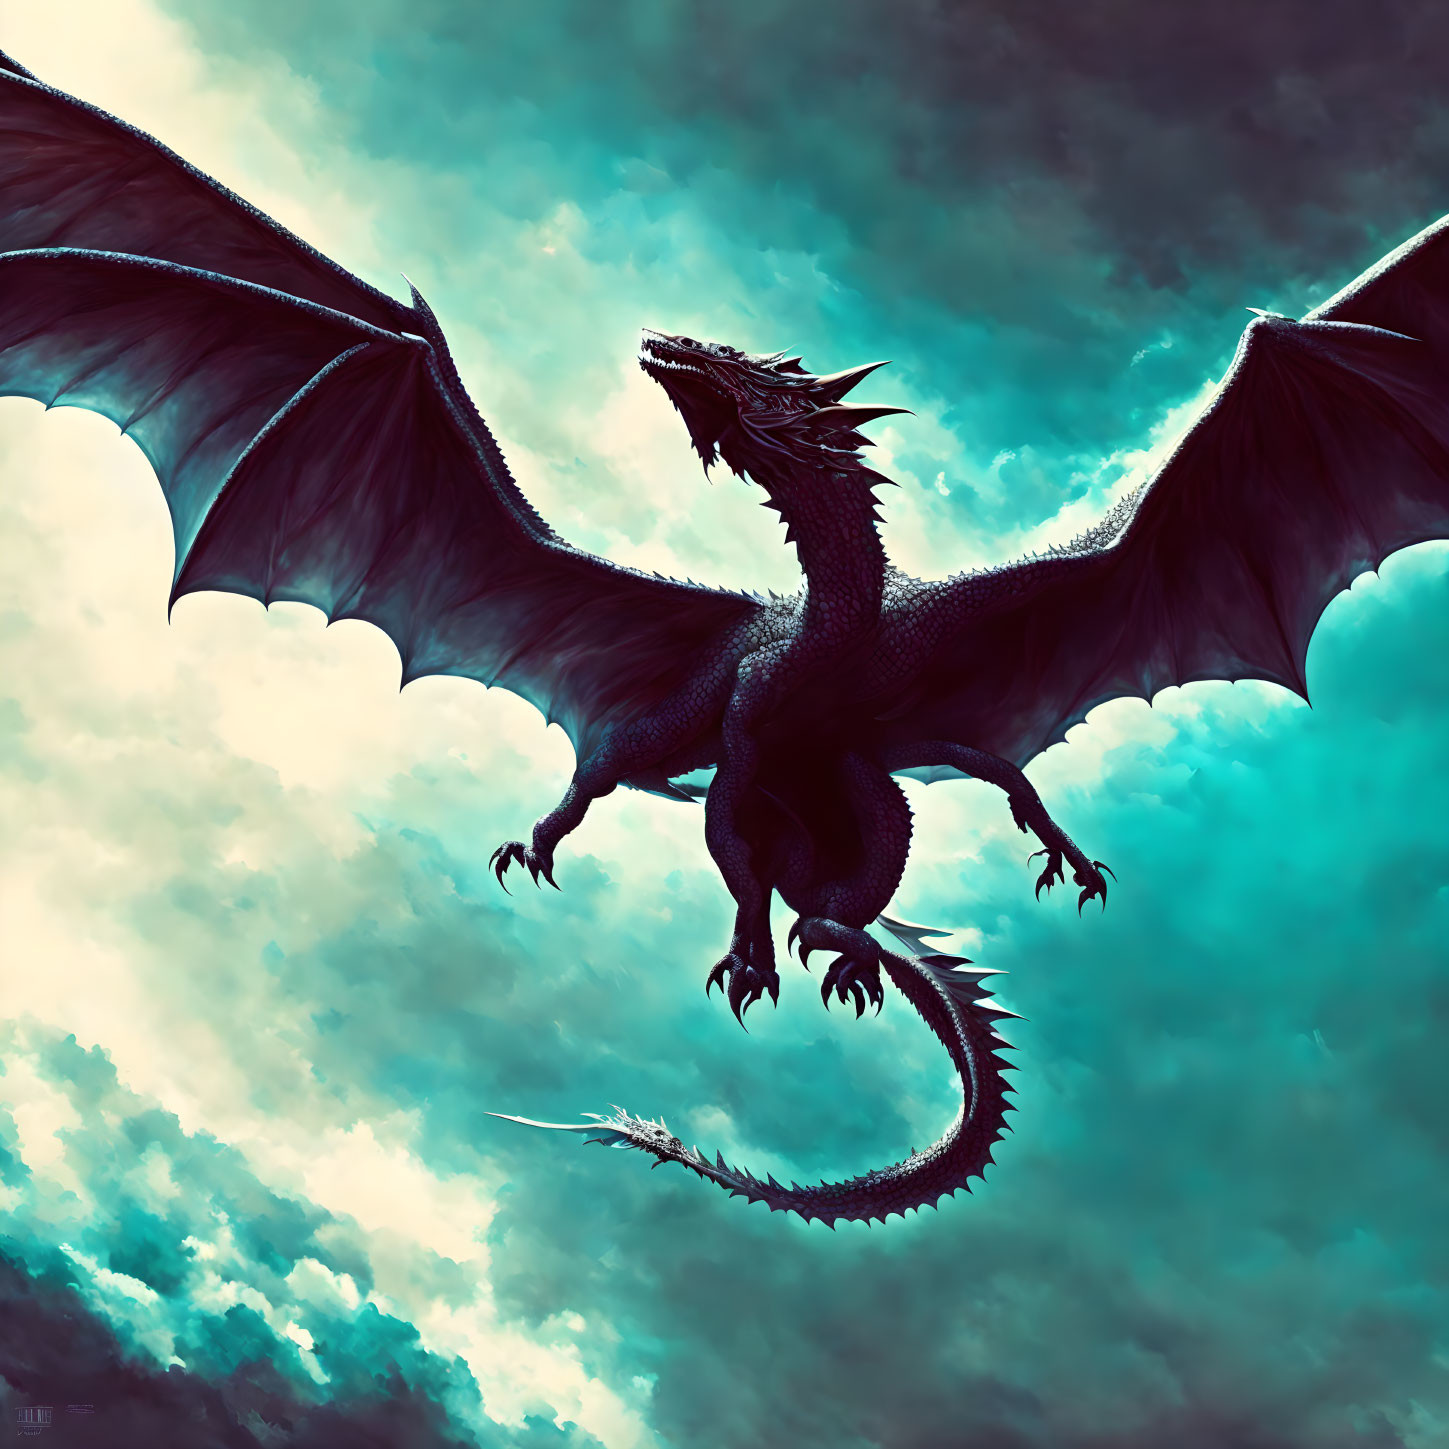 Great dragón flying